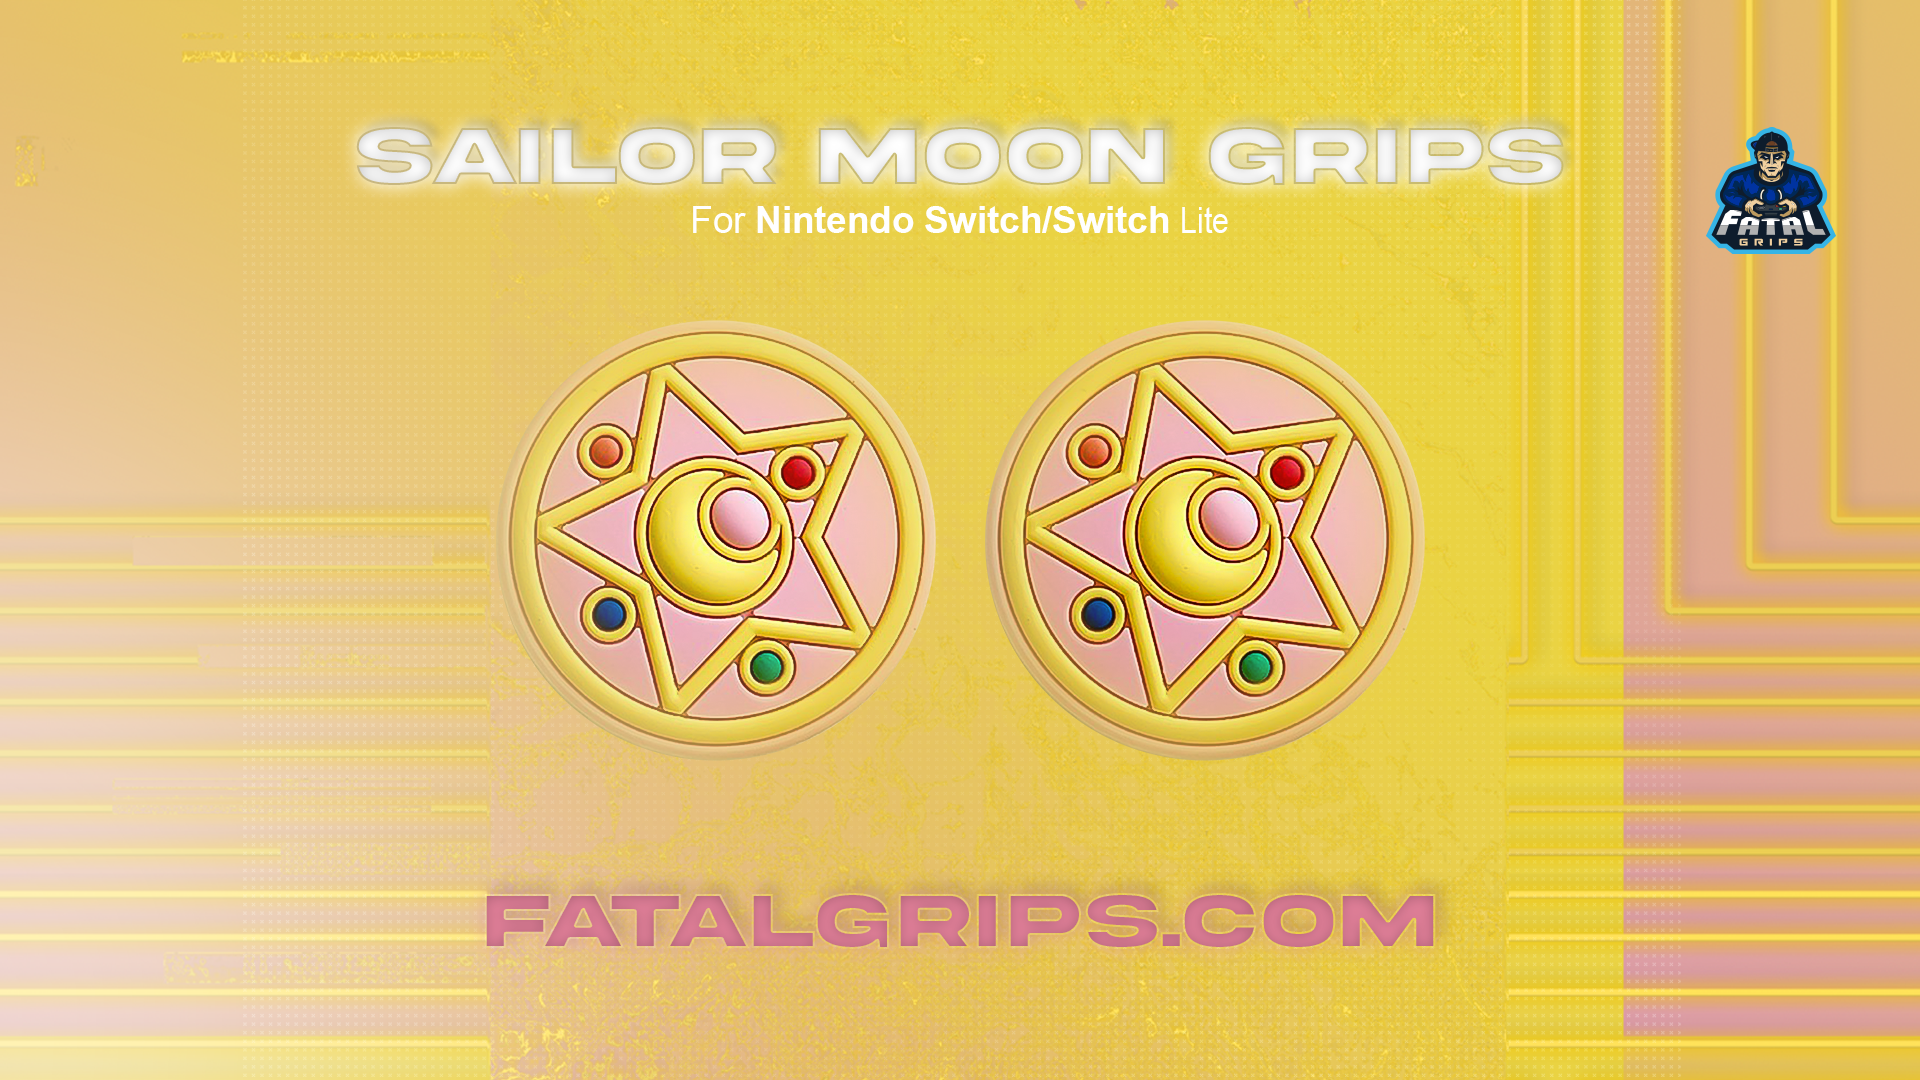 Sailor Moon Grips - Fatal Grips